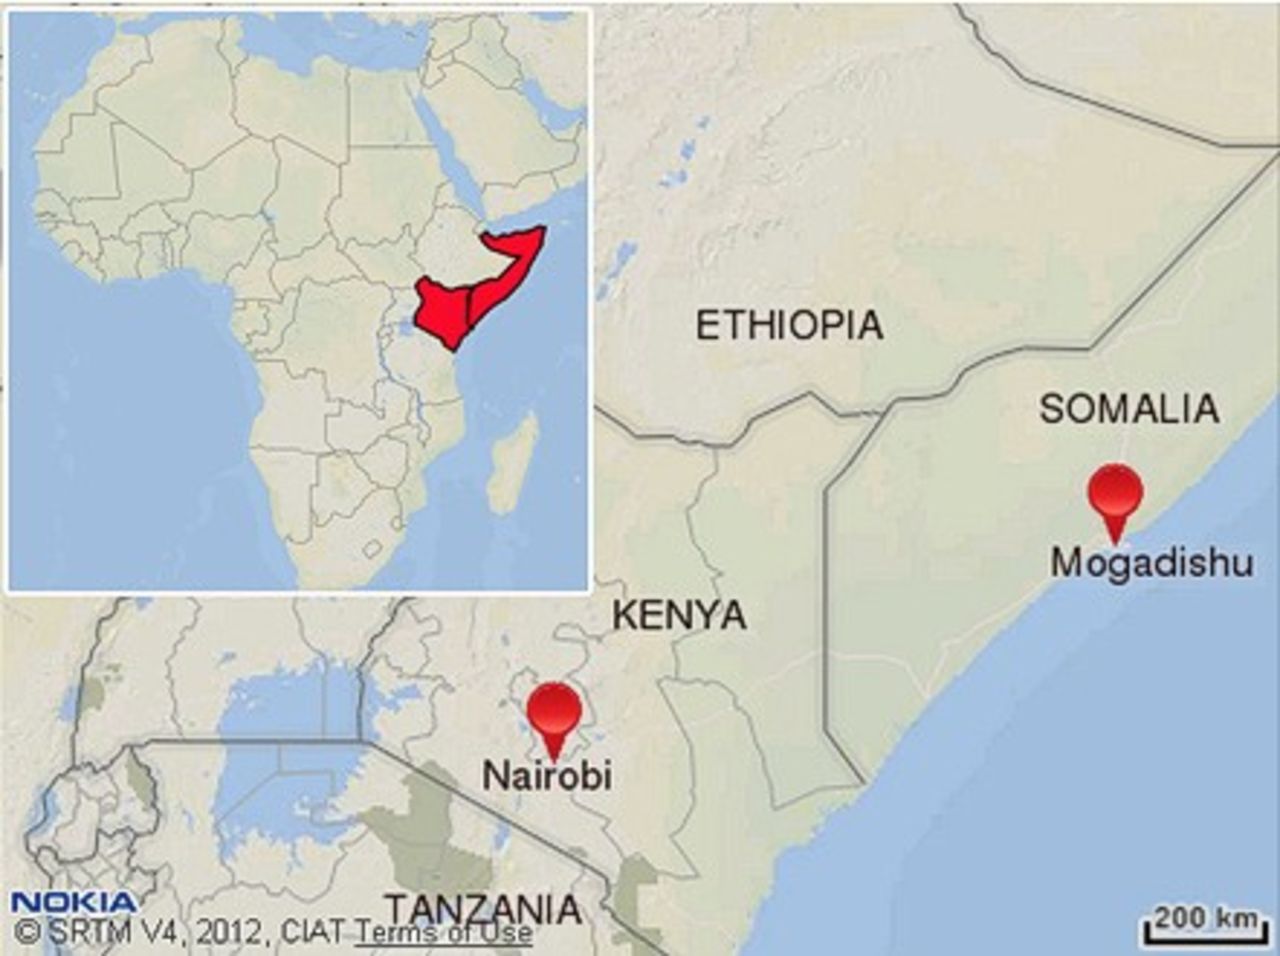 Waayaha Cusub is touring from Nairobi, Kenya, through Somalia, to Mogadishu.